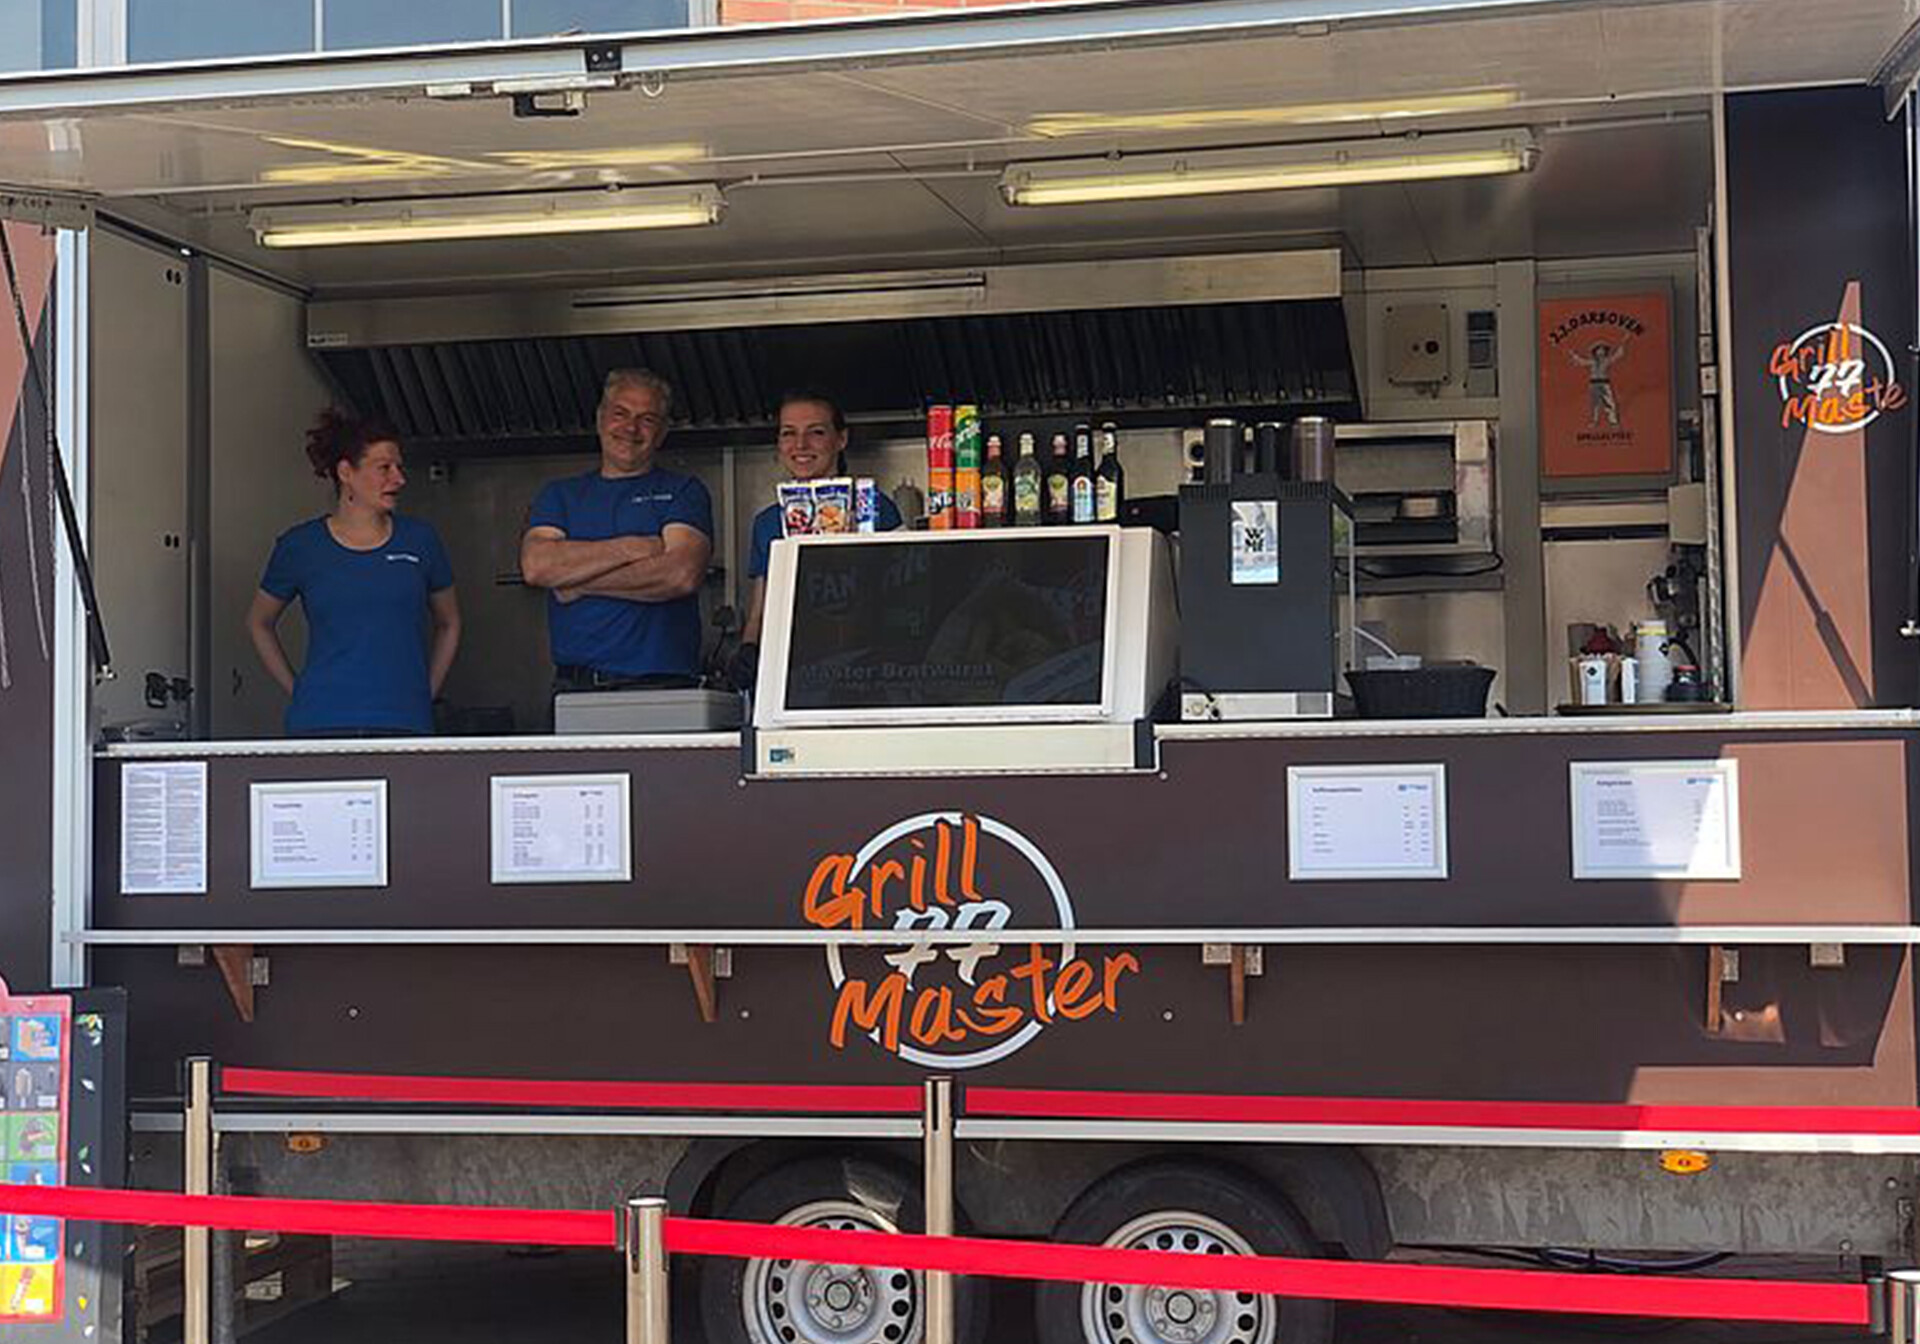 Grillmaster Wismar food truck